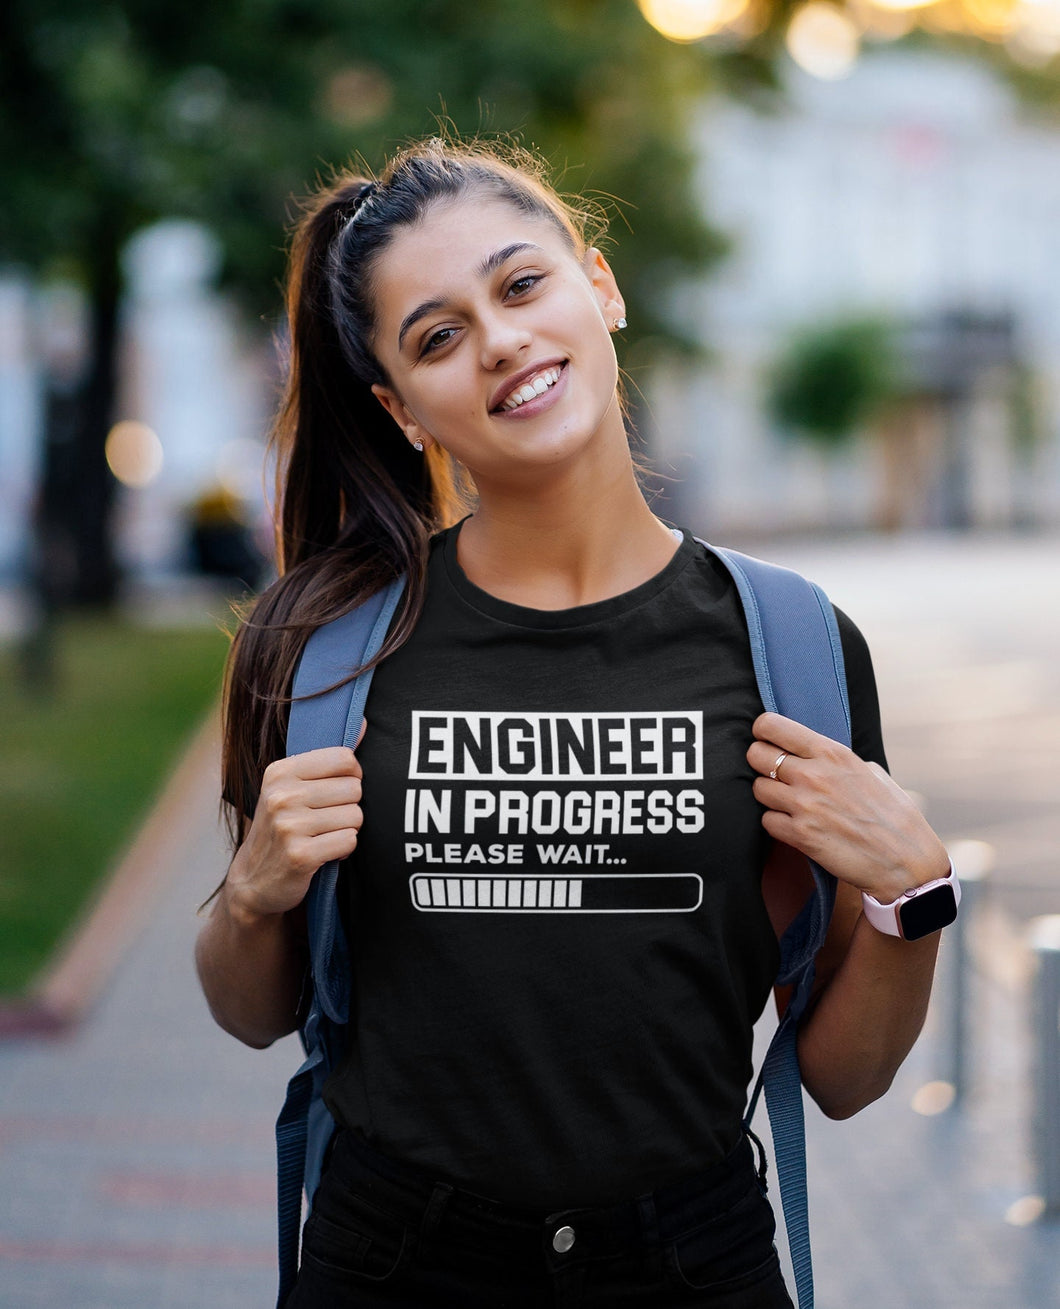 Engineer In Progress Shirt, Engineer Shirt, Engineering Shirt, Funny Engineer Gift, Engineer Student Gift